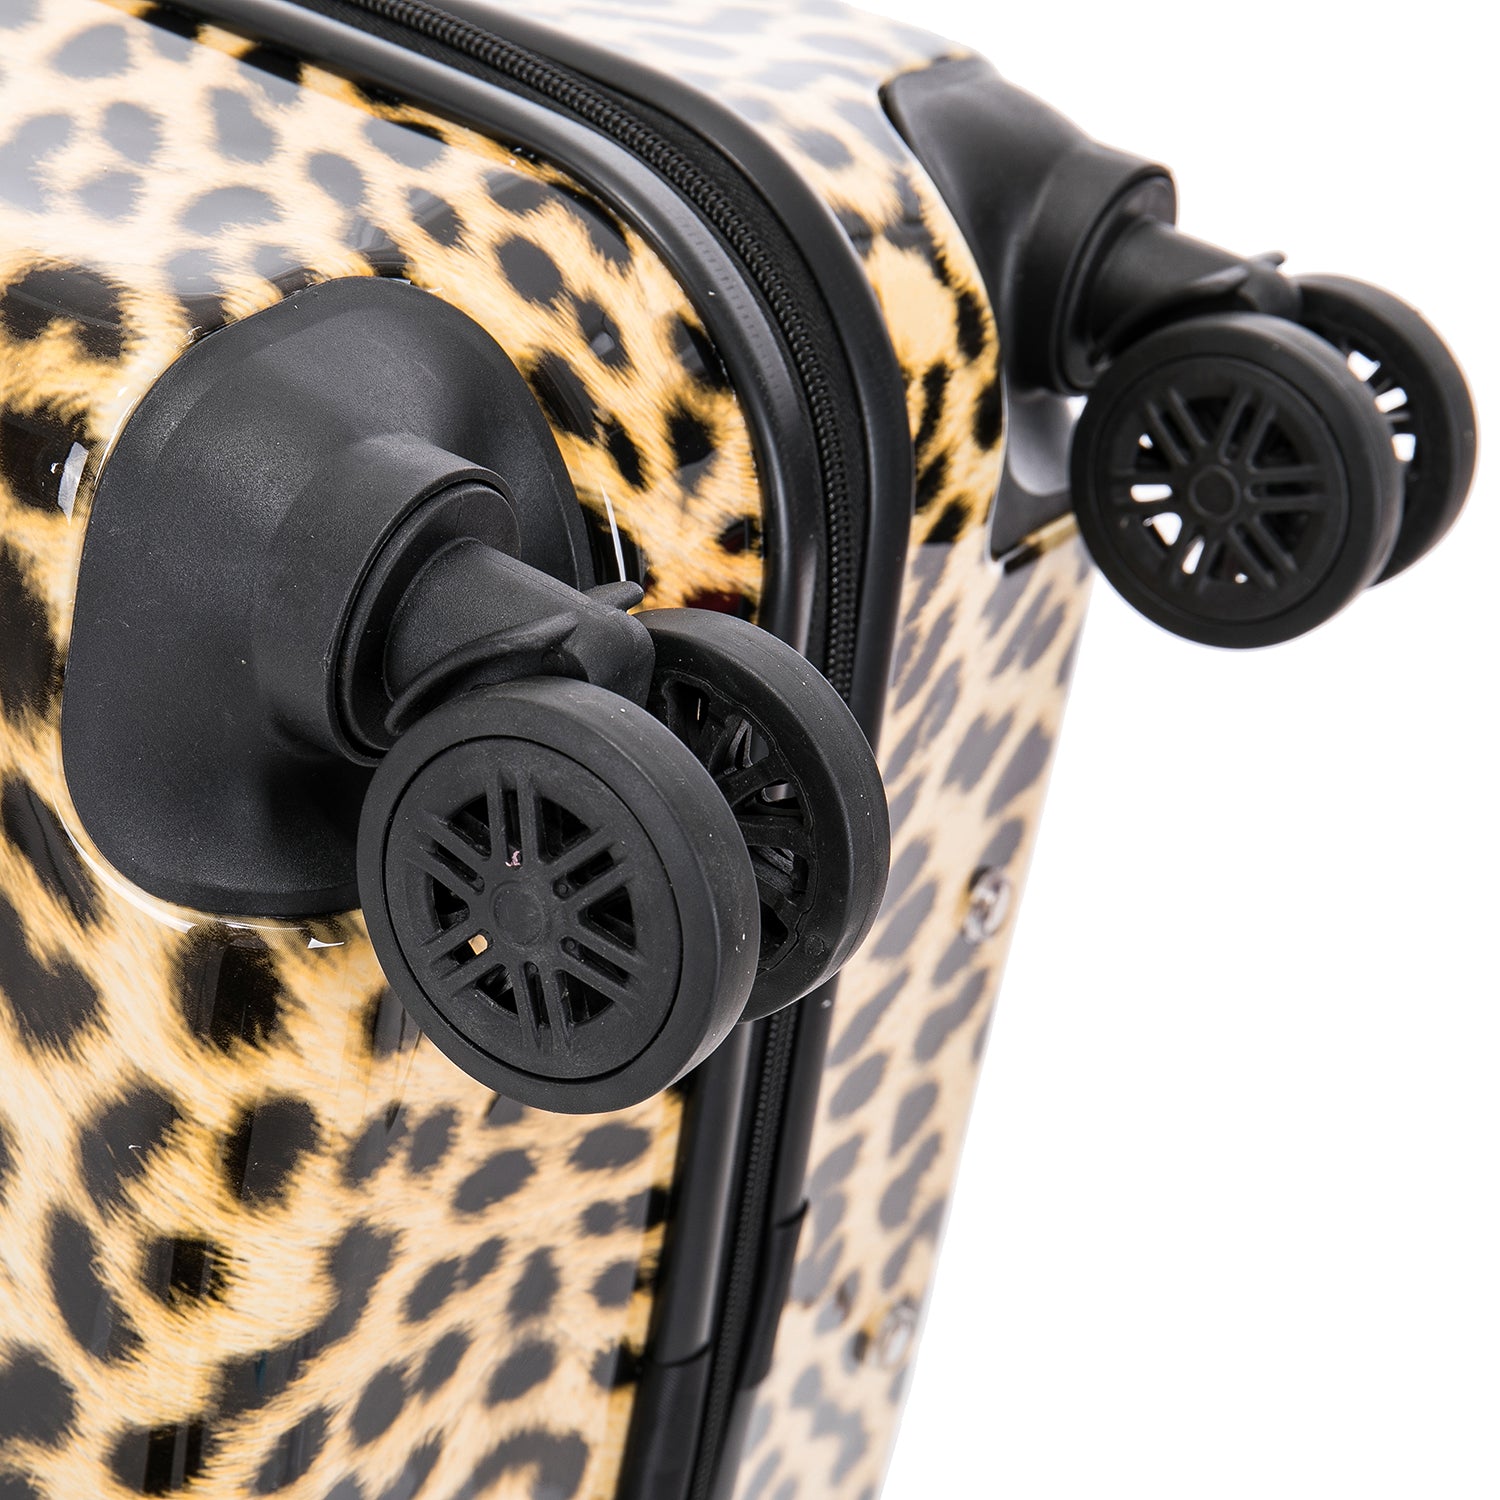 InUSA PRINTS lightweight hardside spinner 28 inch Cheetah